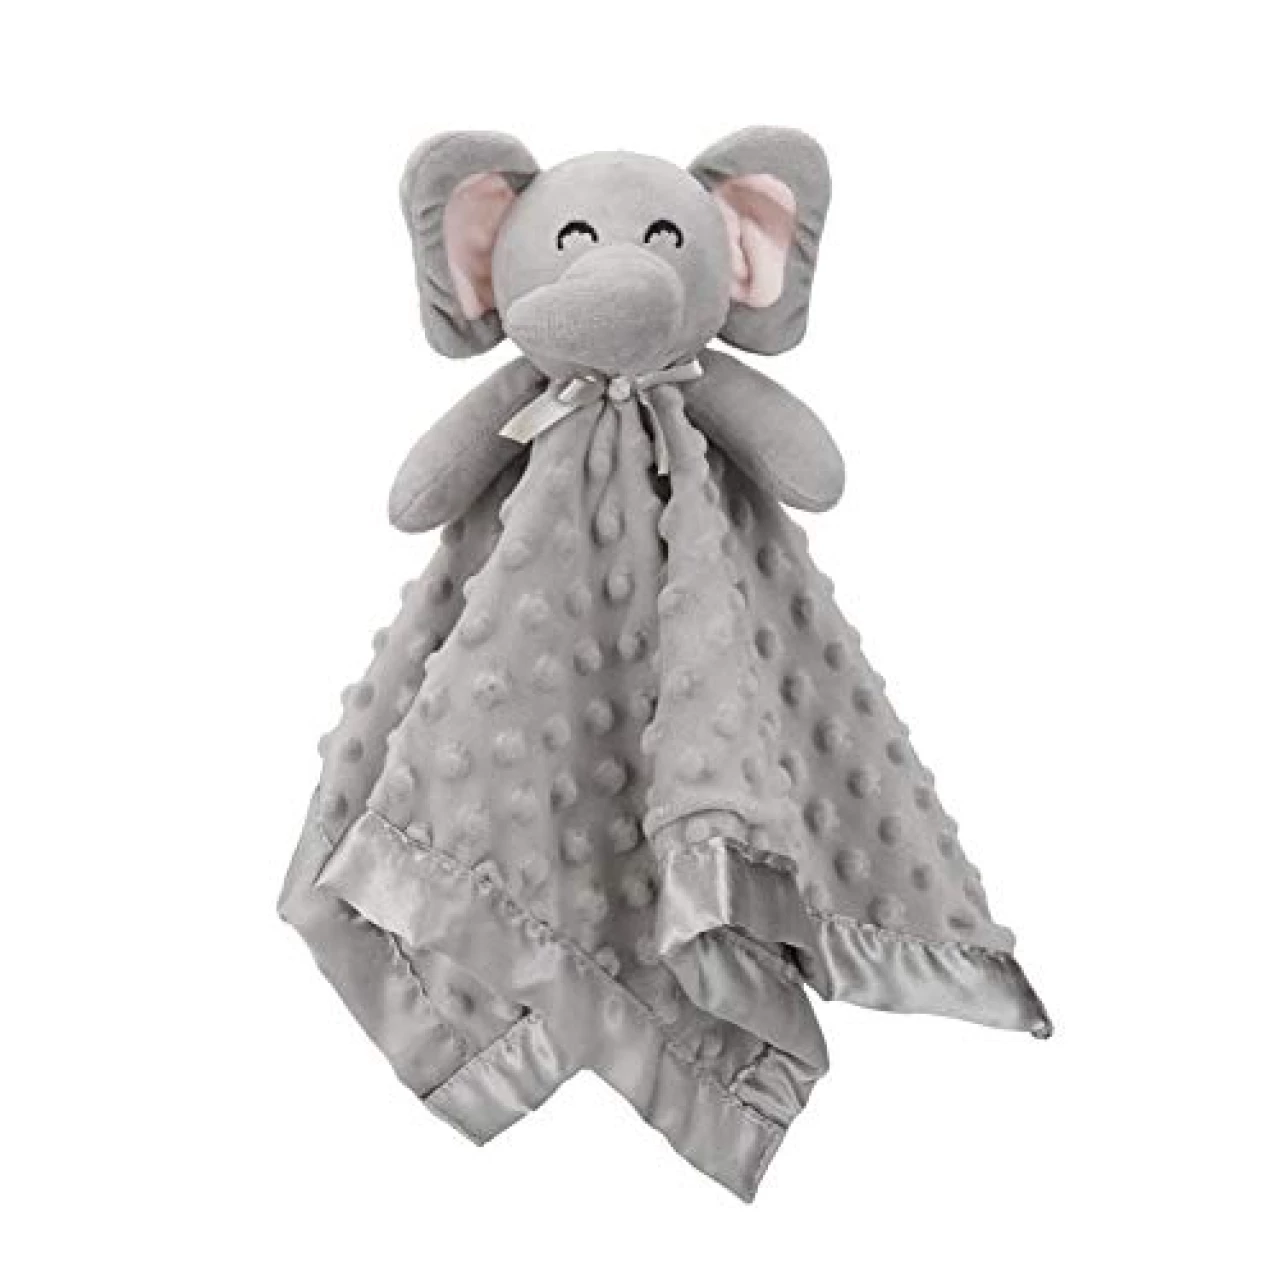 Pro Goleem Elephant Security Blanket, Soft Lovey Unisex Lovie Baby Gifts for Newborn Boys and Girls Snuggle Toy Stuffed Animal Grey